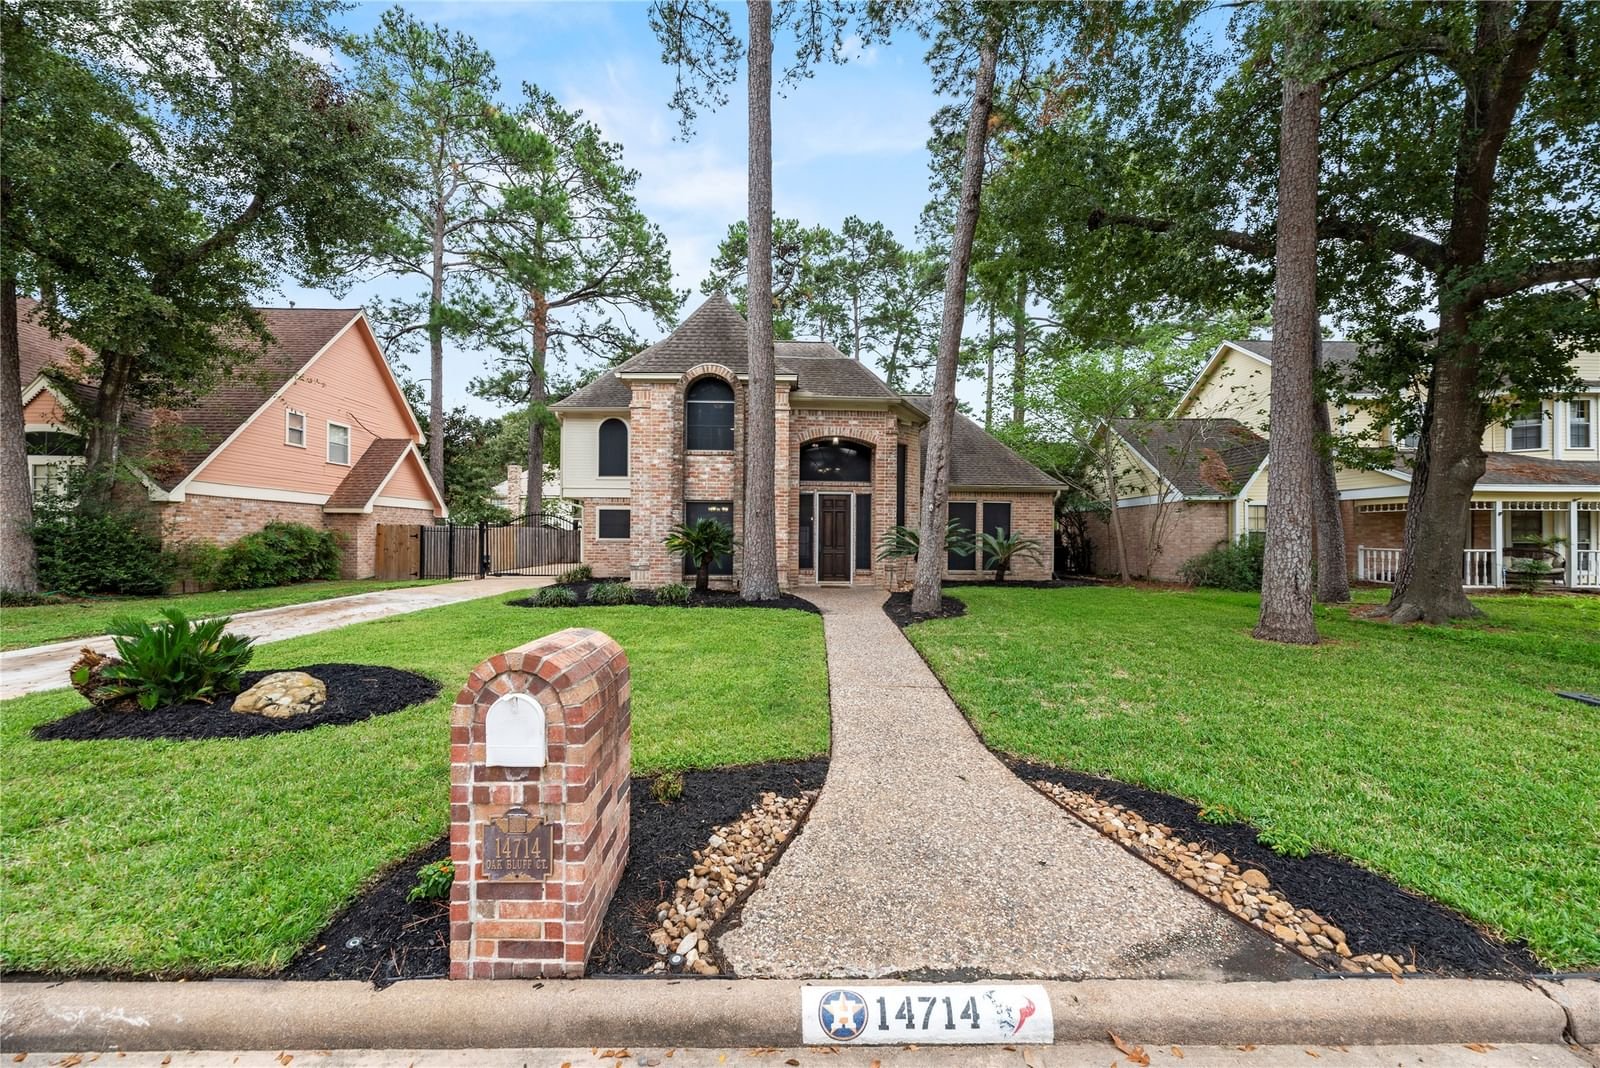 Real estate property located at 14714 Oak Bluff, Harris, Hunterwood Forest Sec 02, Houston, TX, US